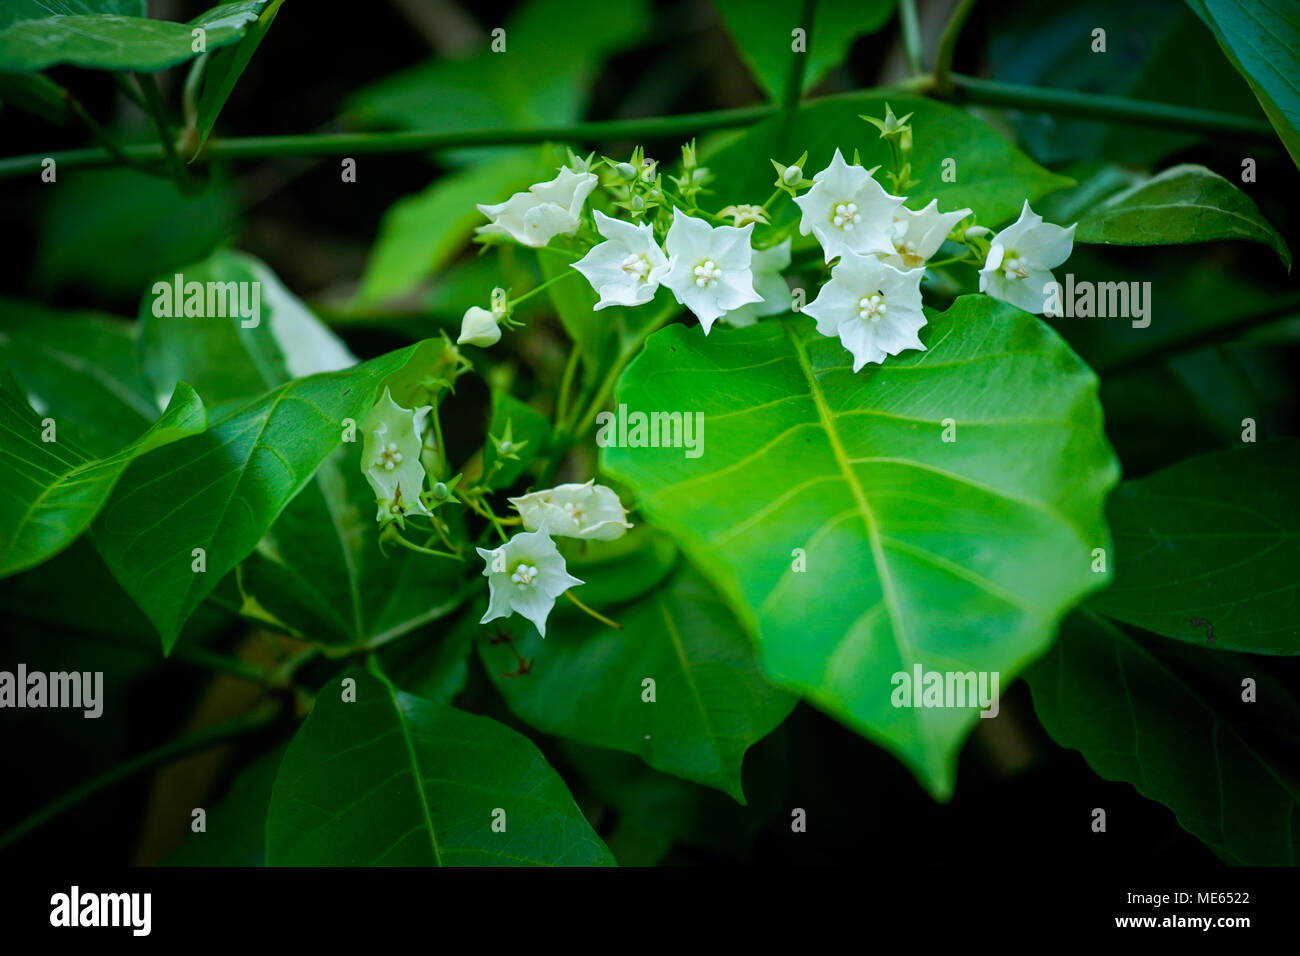 vallaris glabra white flower on tree Stock Photo